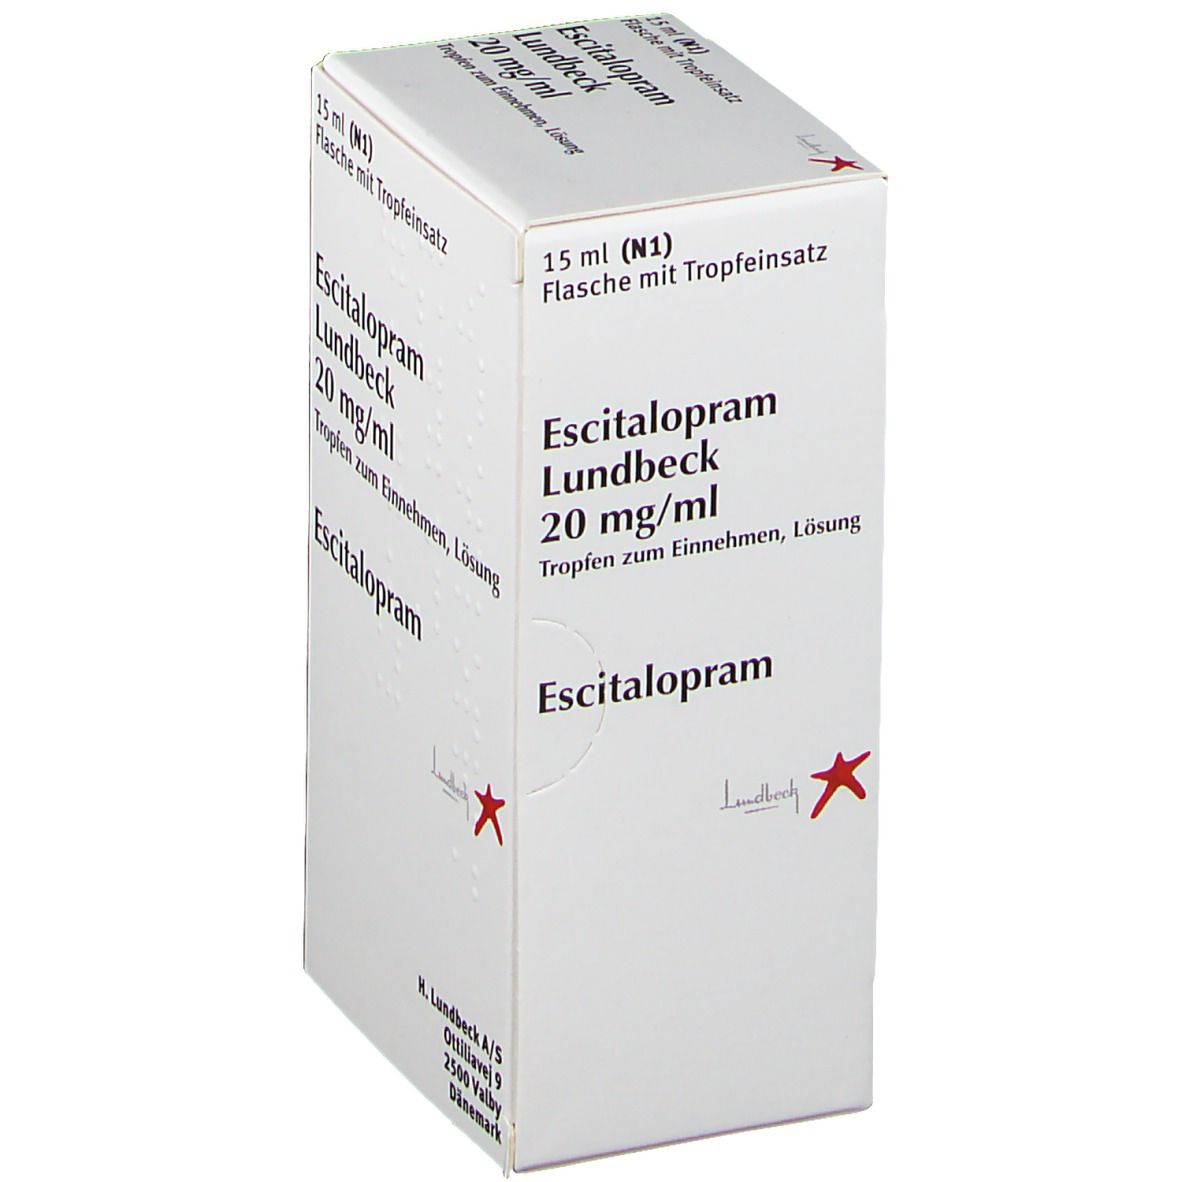 Escitalopram Lundbeck 20 mg/ml